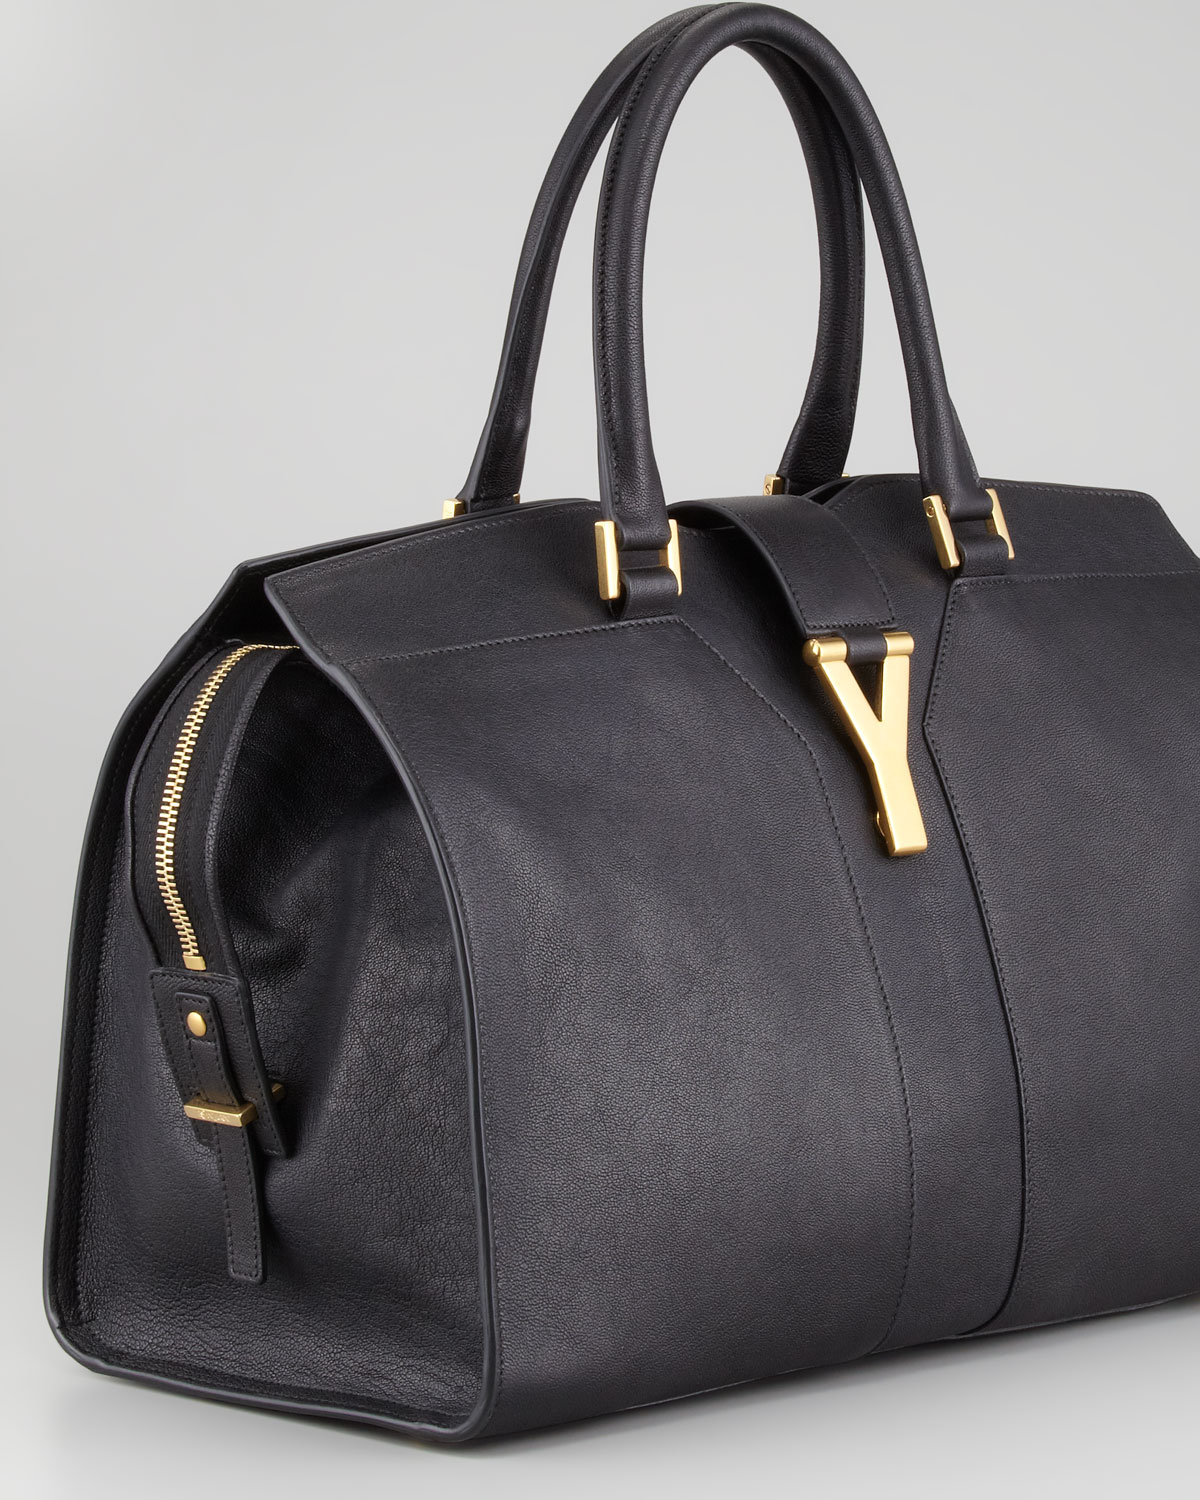 royal blue suede clutch bags - Saint laurent Cabas Chyc Medium Tote Bag in Black | Lyst